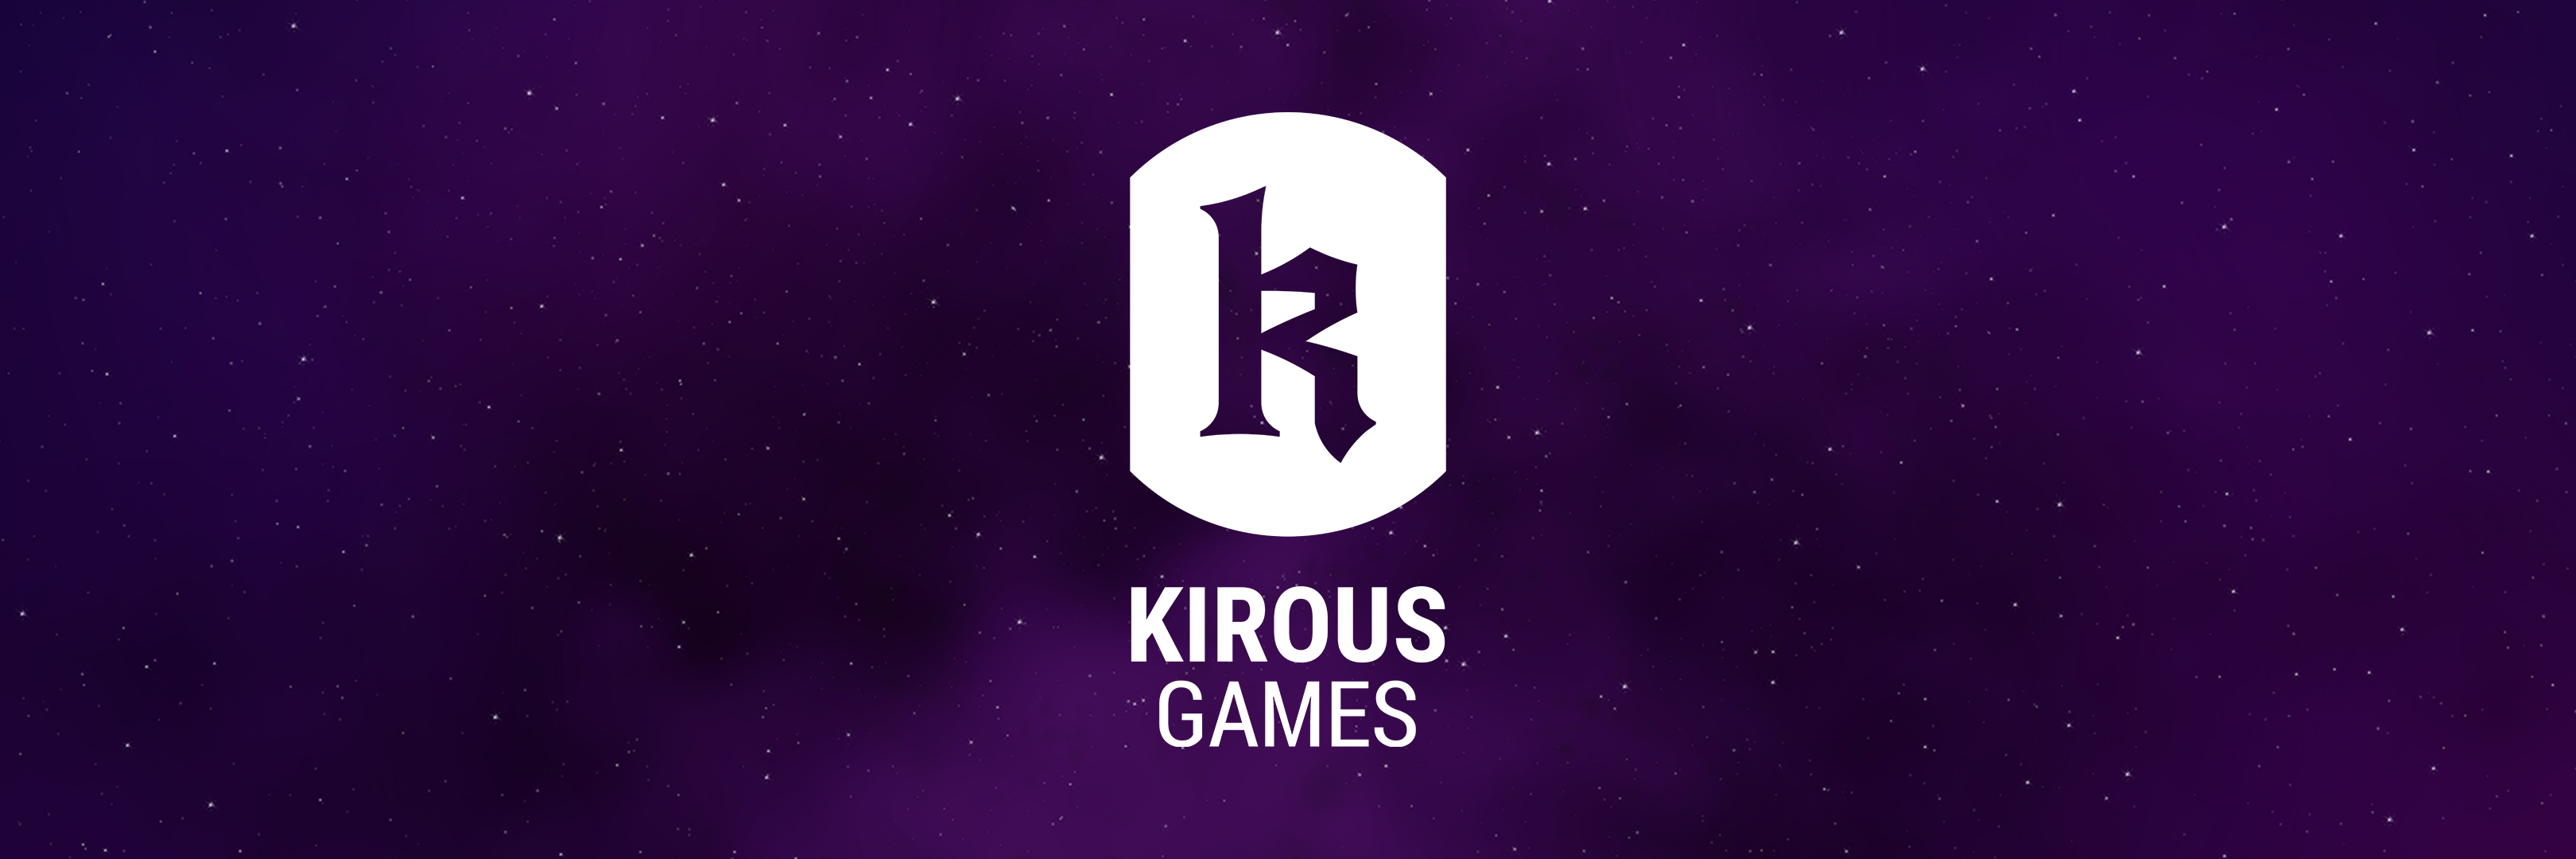 Kirous Games Logo